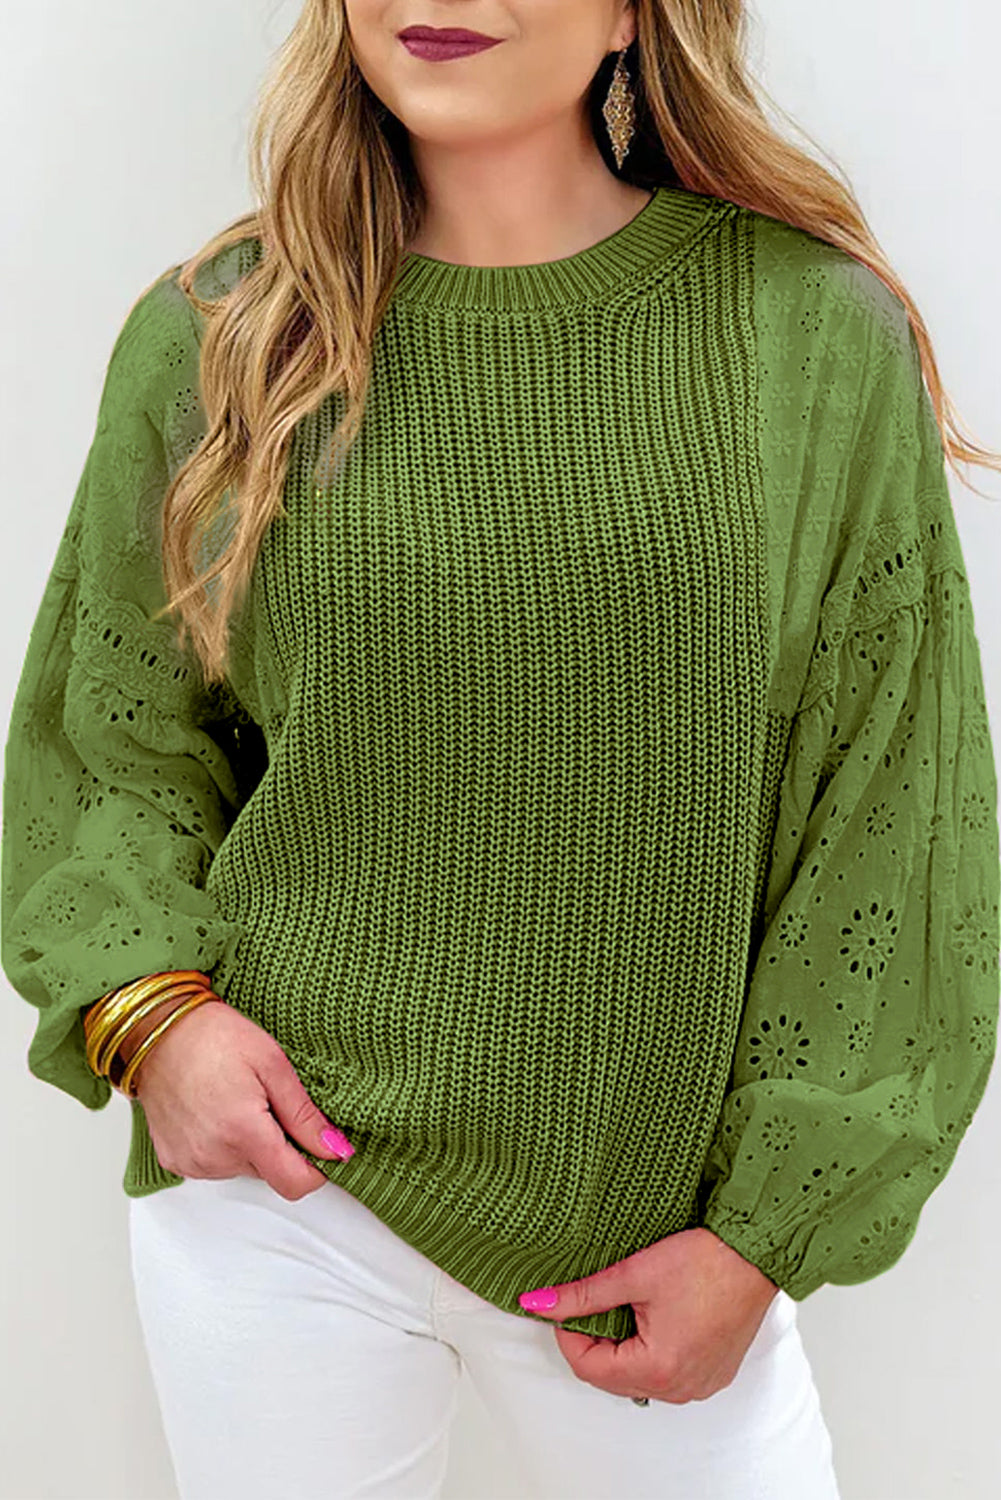 Patchwork pulover na spuštena ramena sa zelenim ušicama